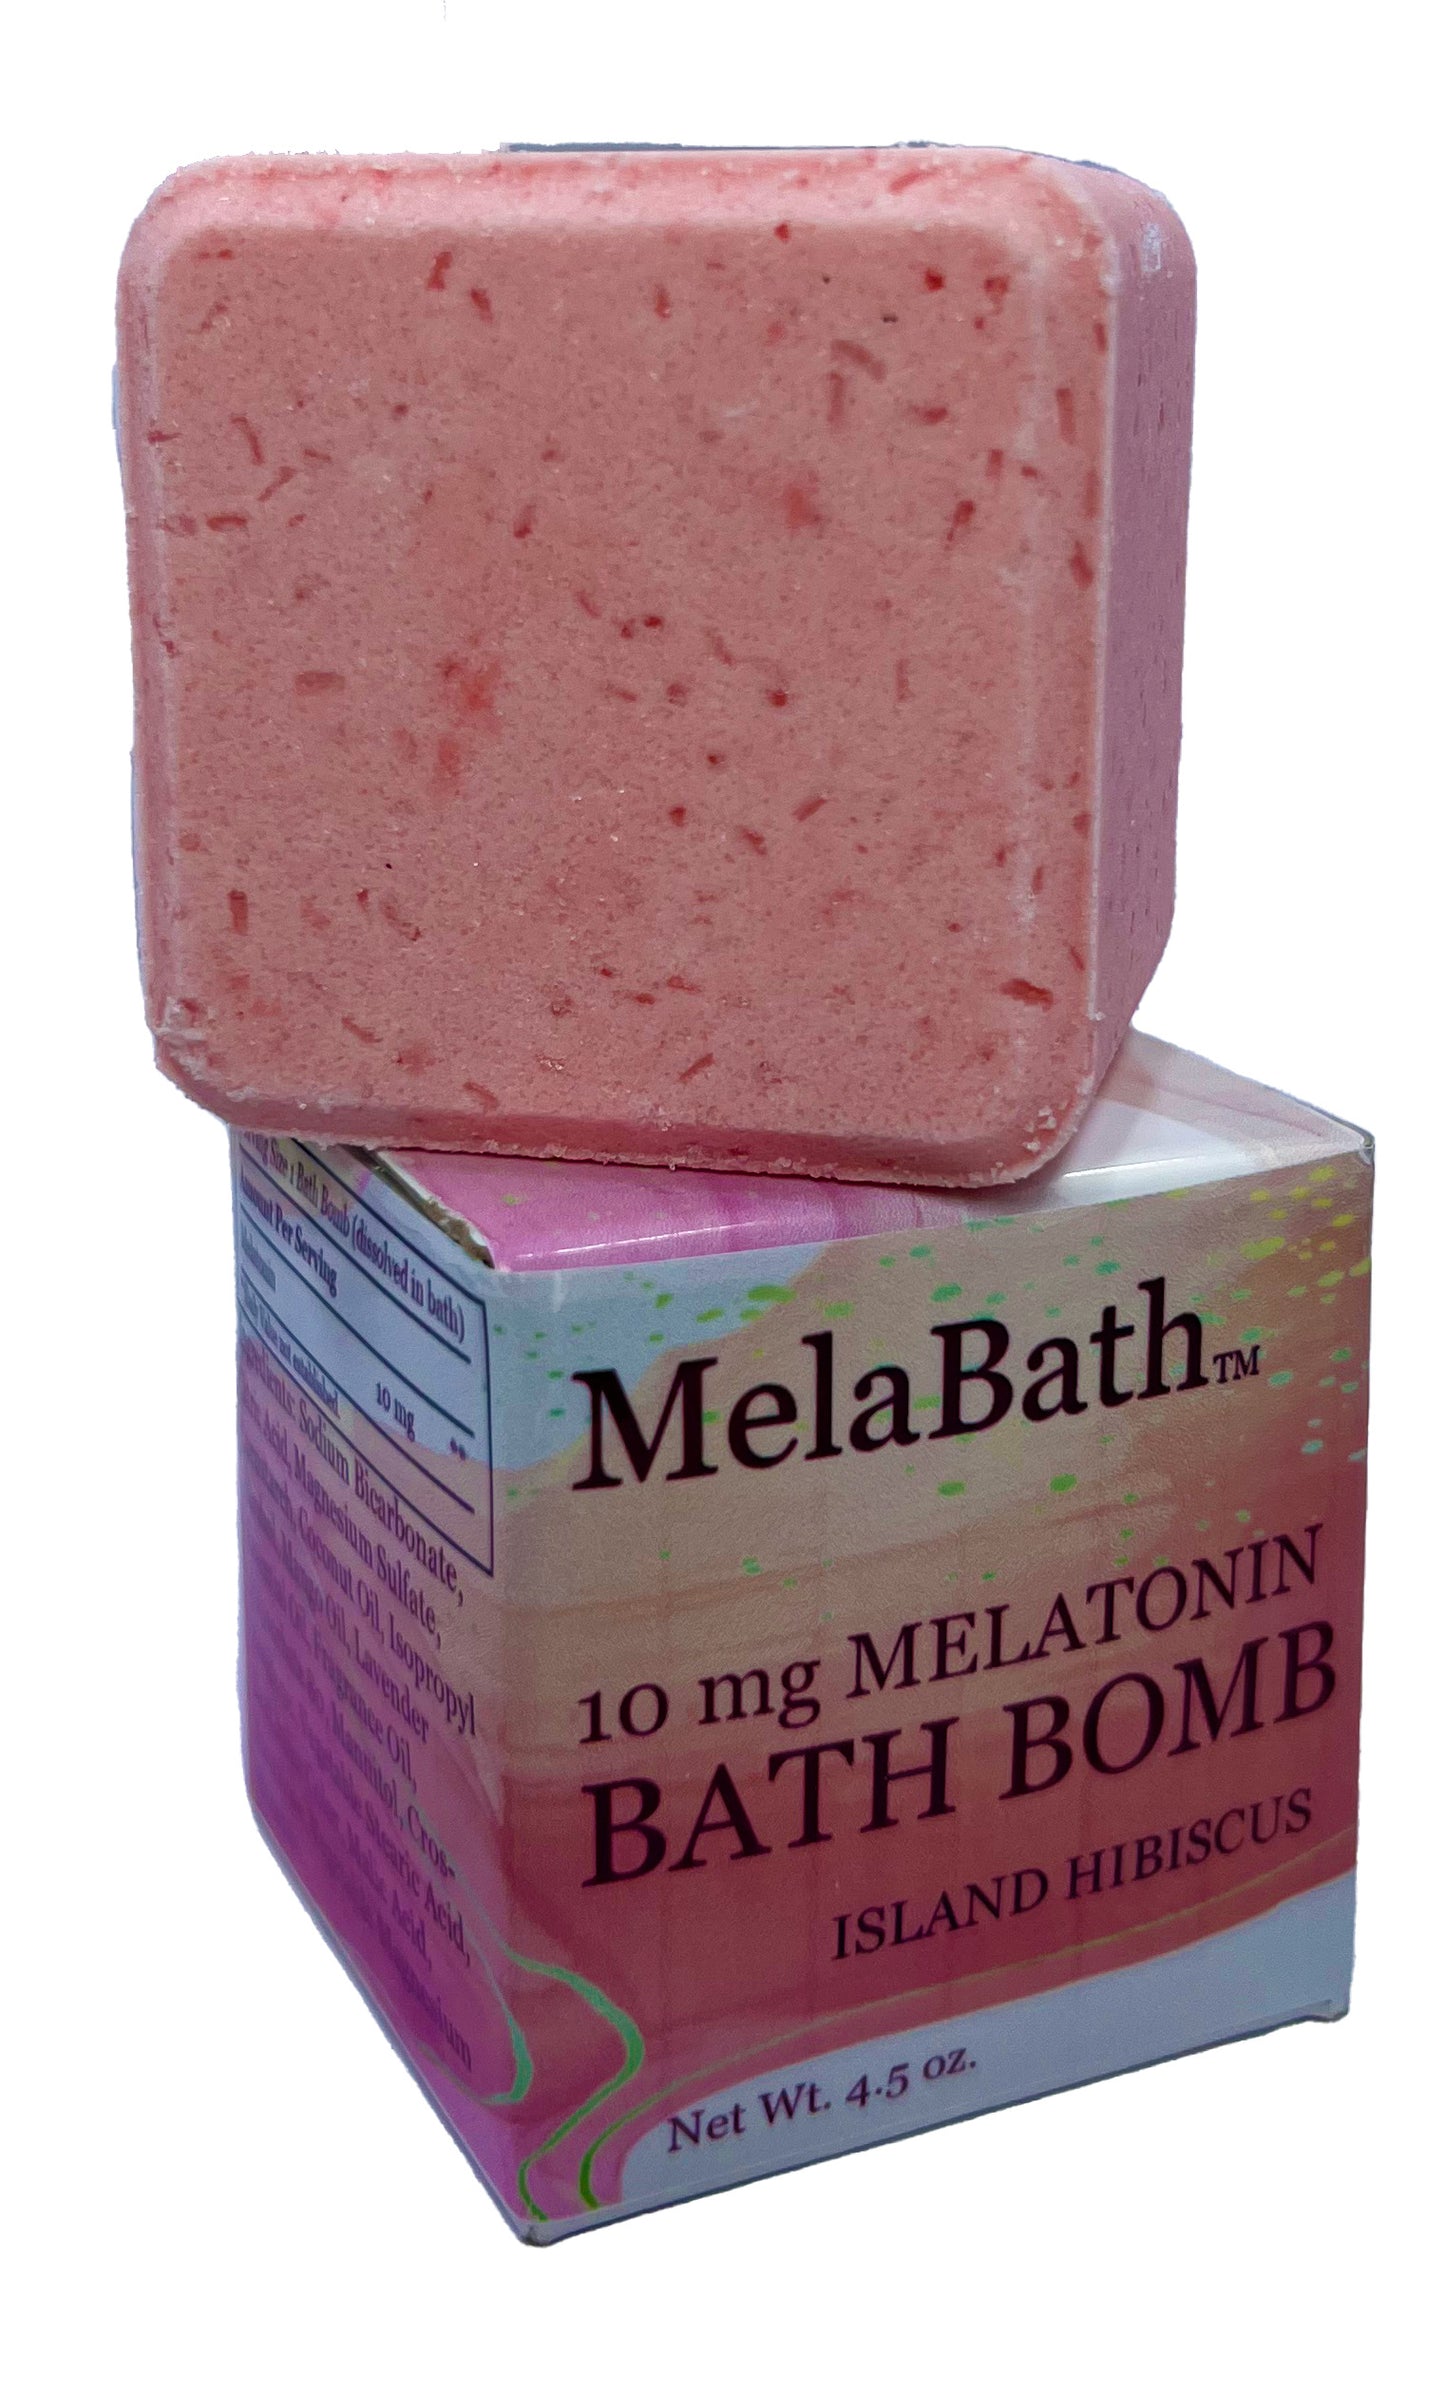 MelaBath 10 mg Melatonin Bath Bomb